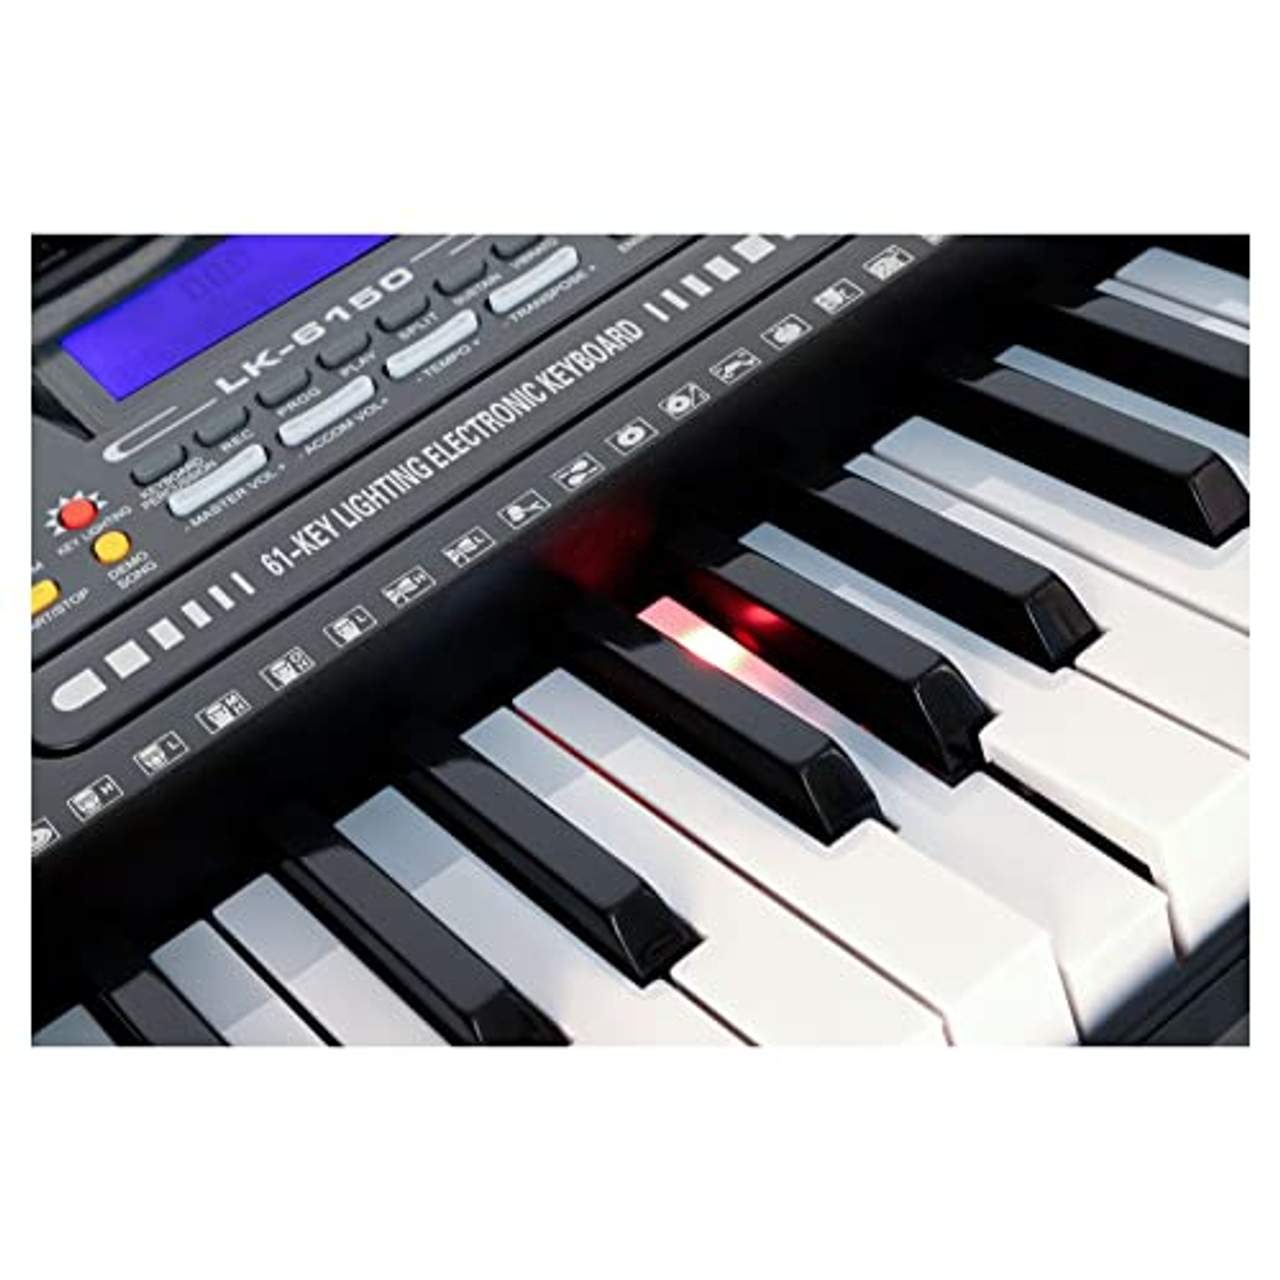 McGrey LK-6150 61 Tasten Keyboard Set